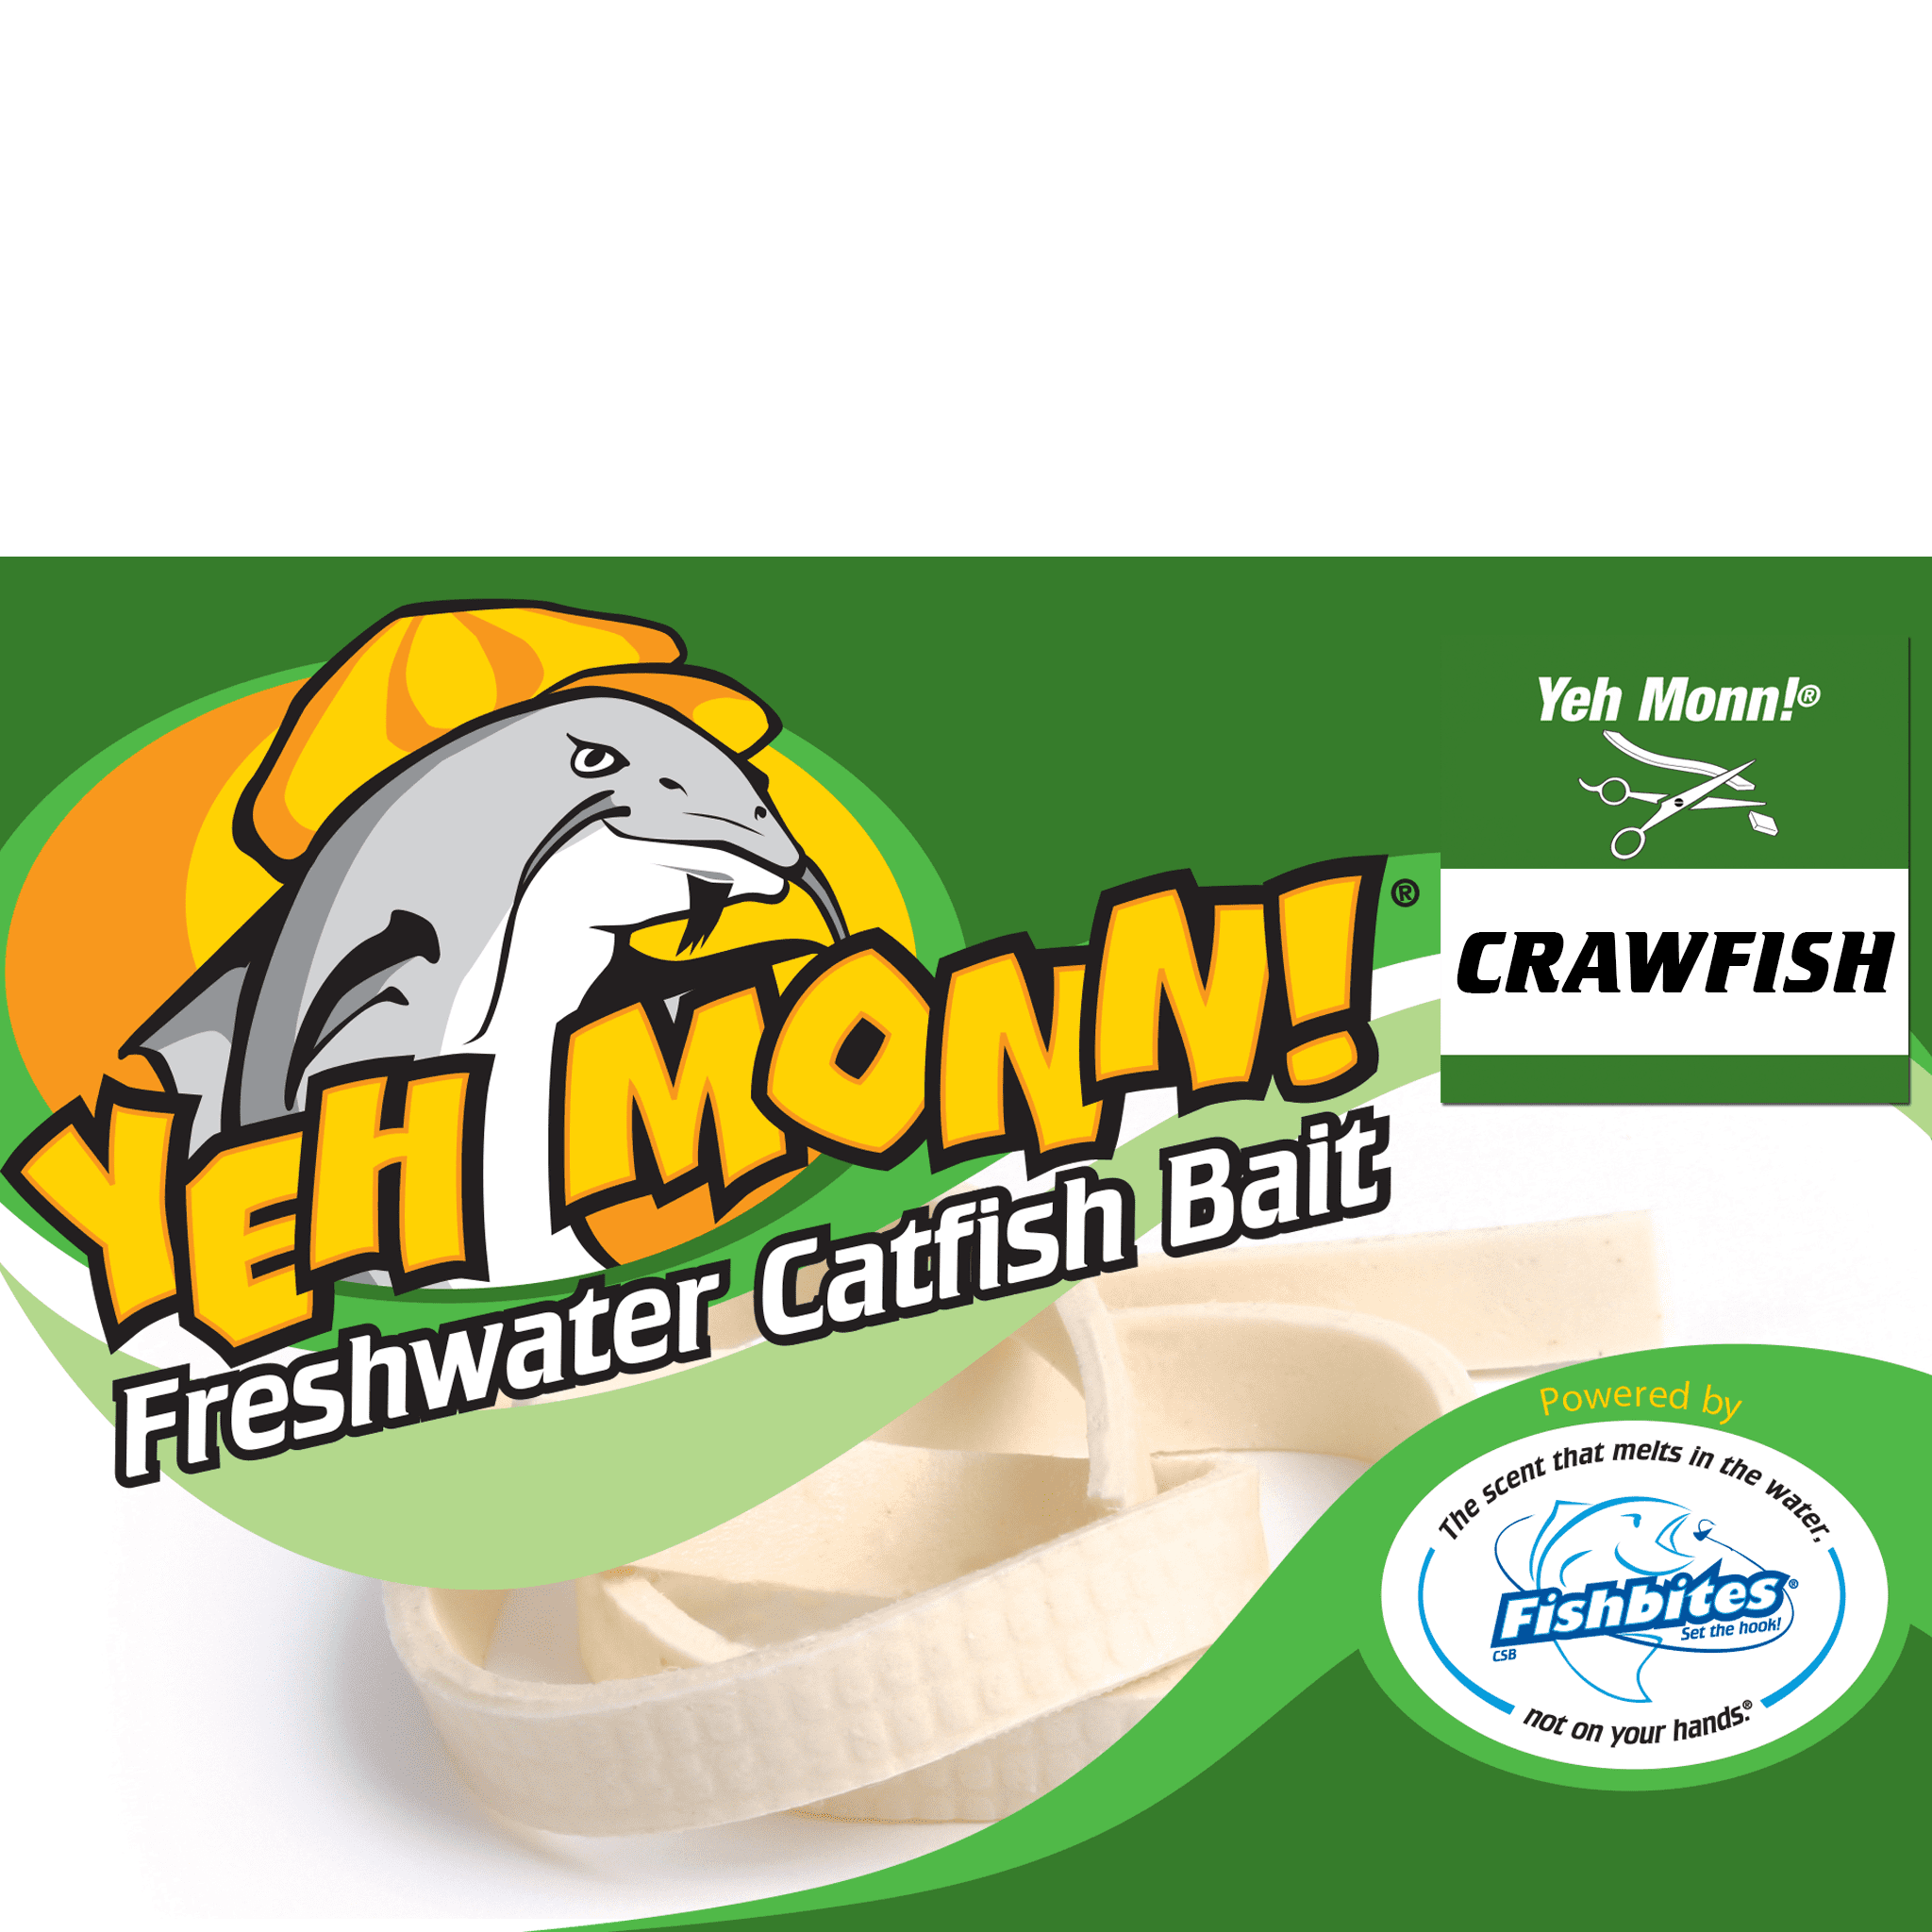 Fishbites Yeh Monn! Catfish Bait, Crawfish